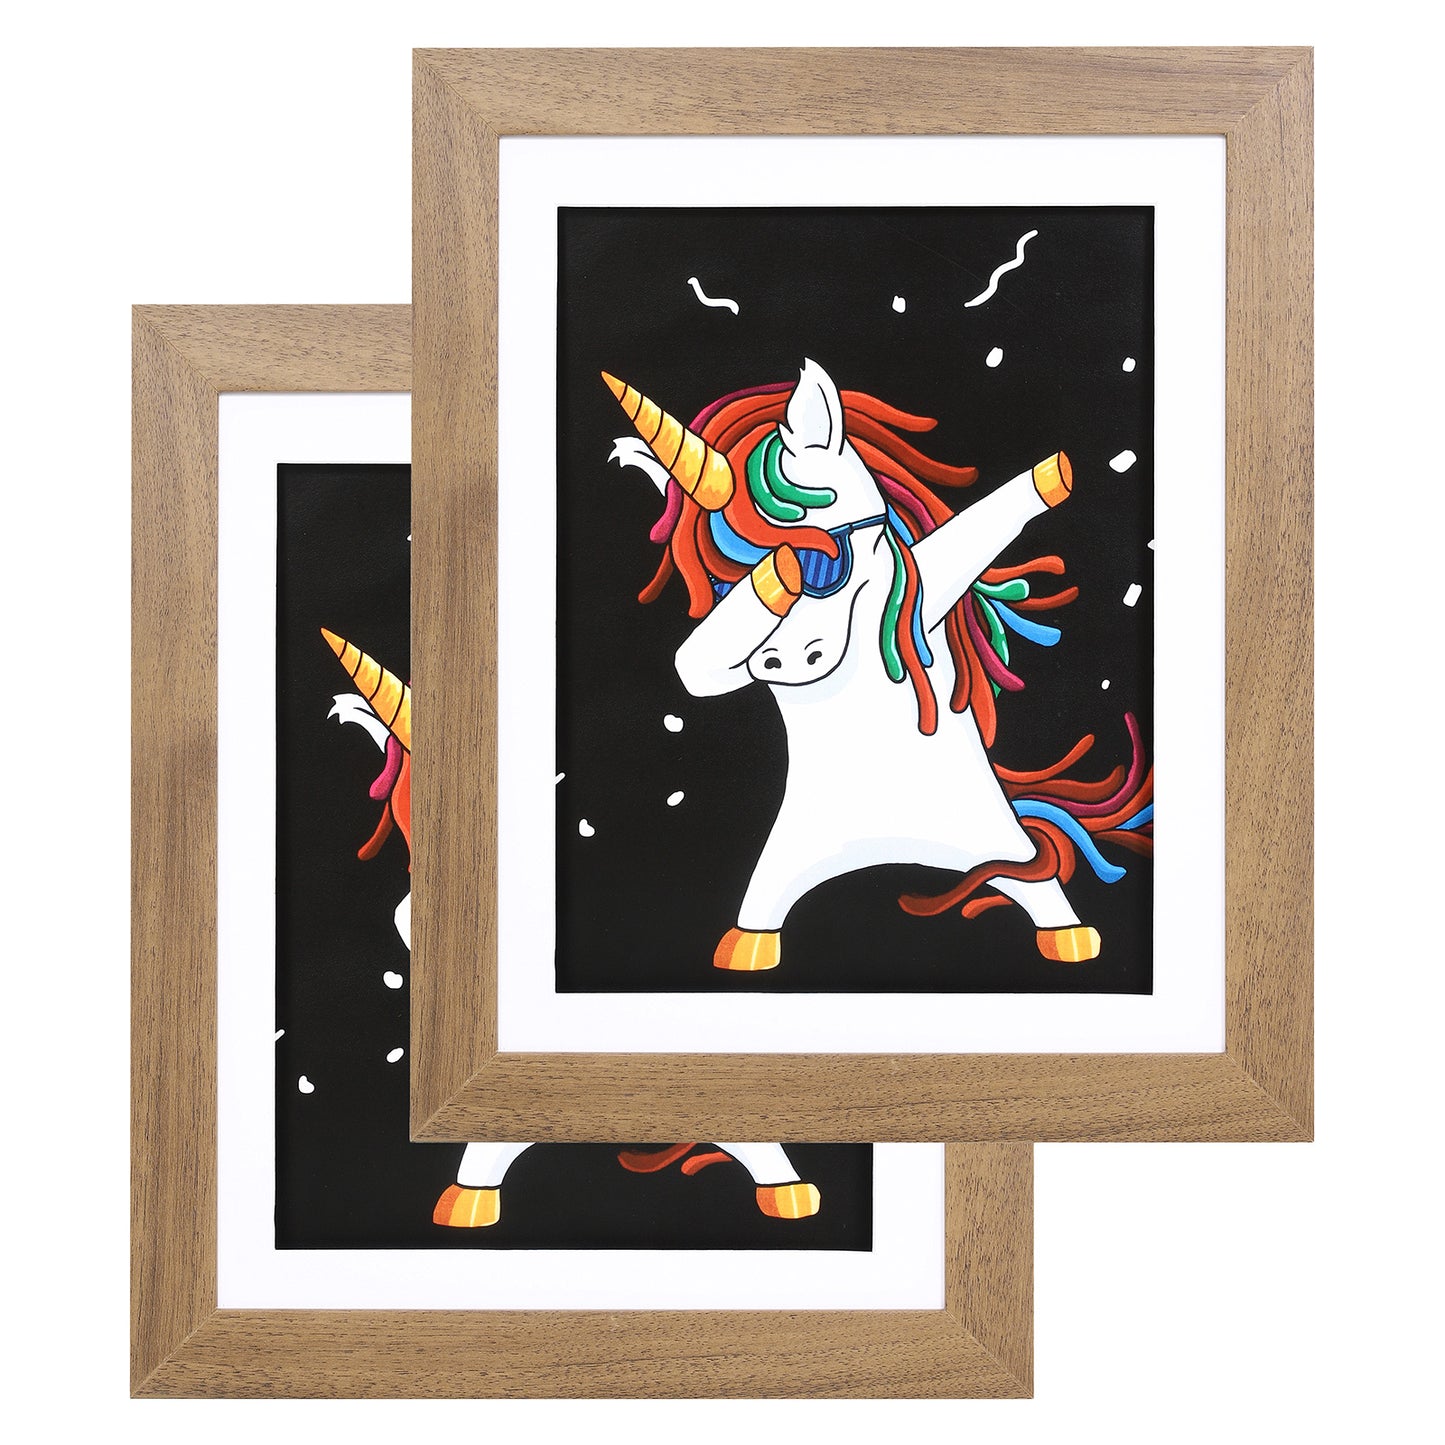 10" x 12.5" Dark Oak MDF Wood Kids Art Picture Frame with Elastic Straps